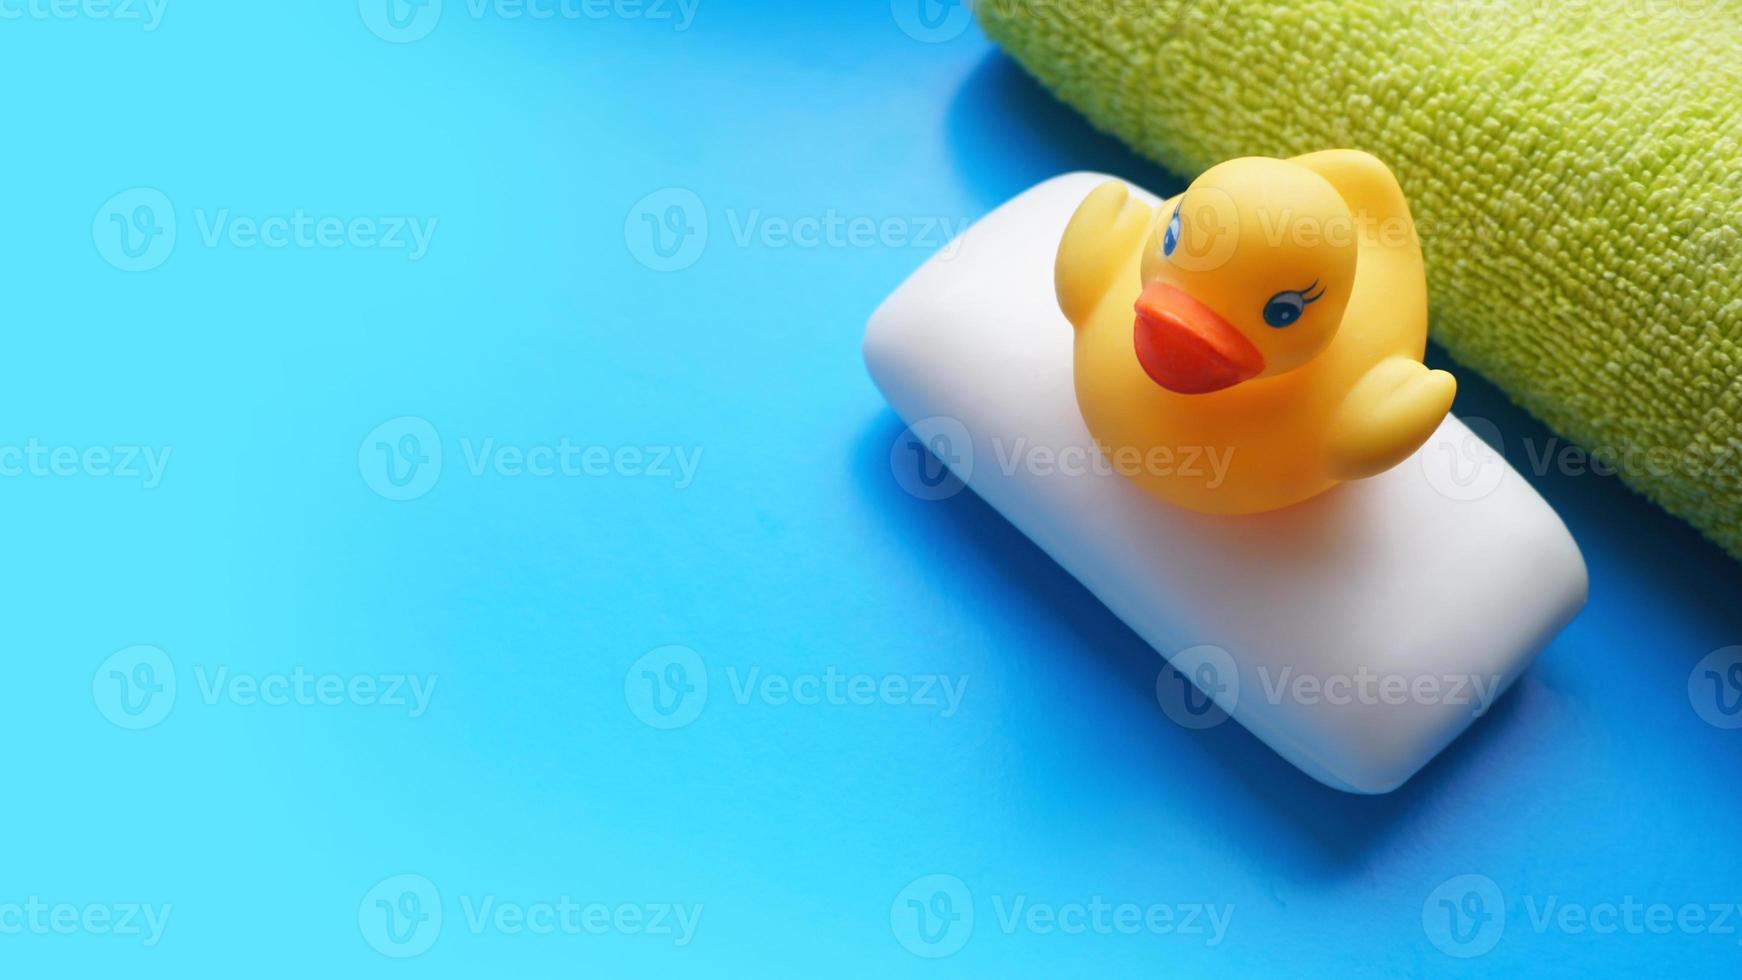 serviette, savon et canard jouet jaune sur fond bleu photo